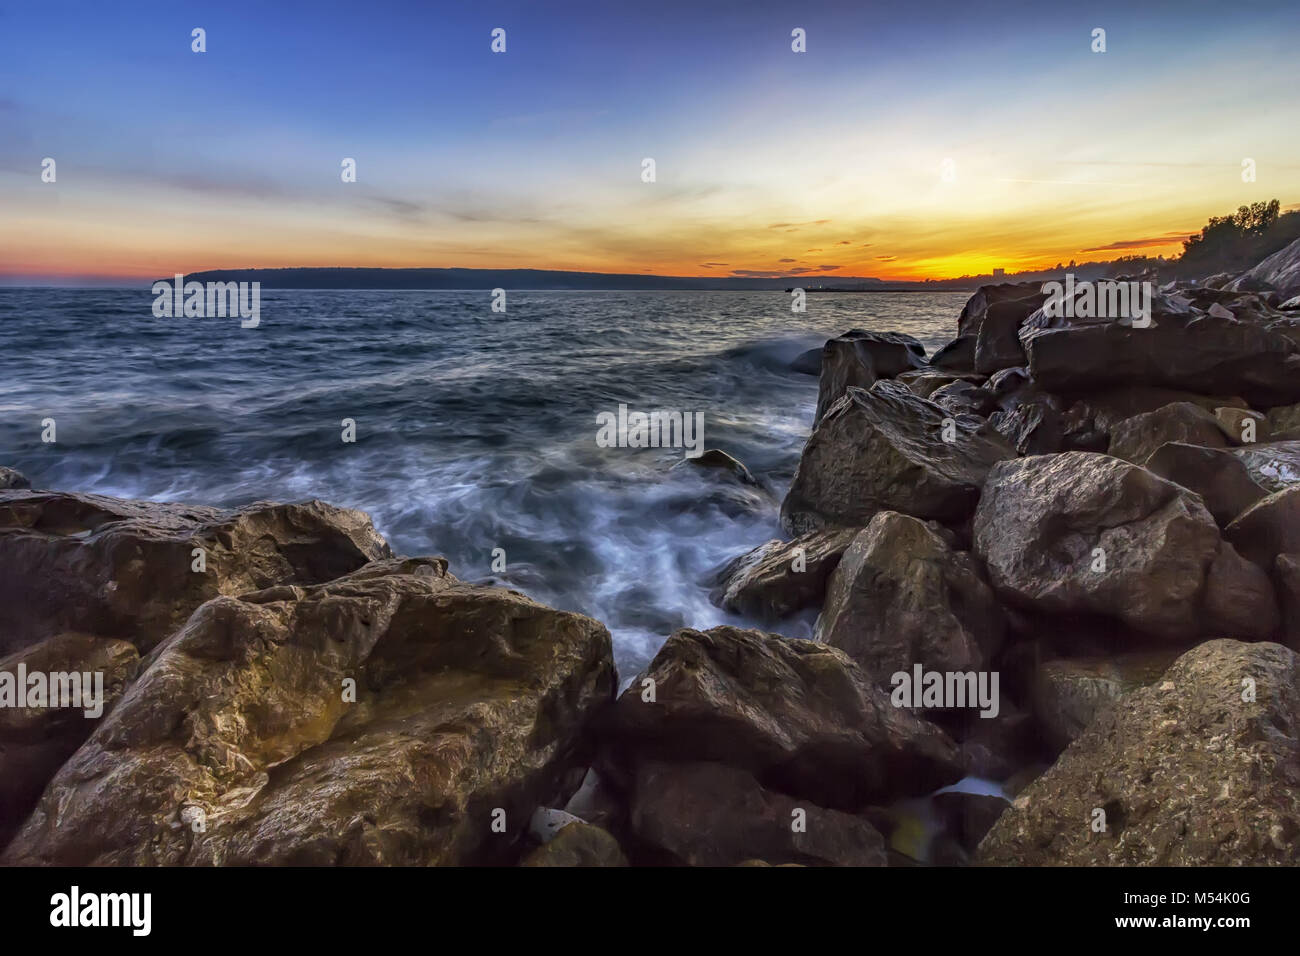 La puesta de sol sobre el mar . Foto de stock